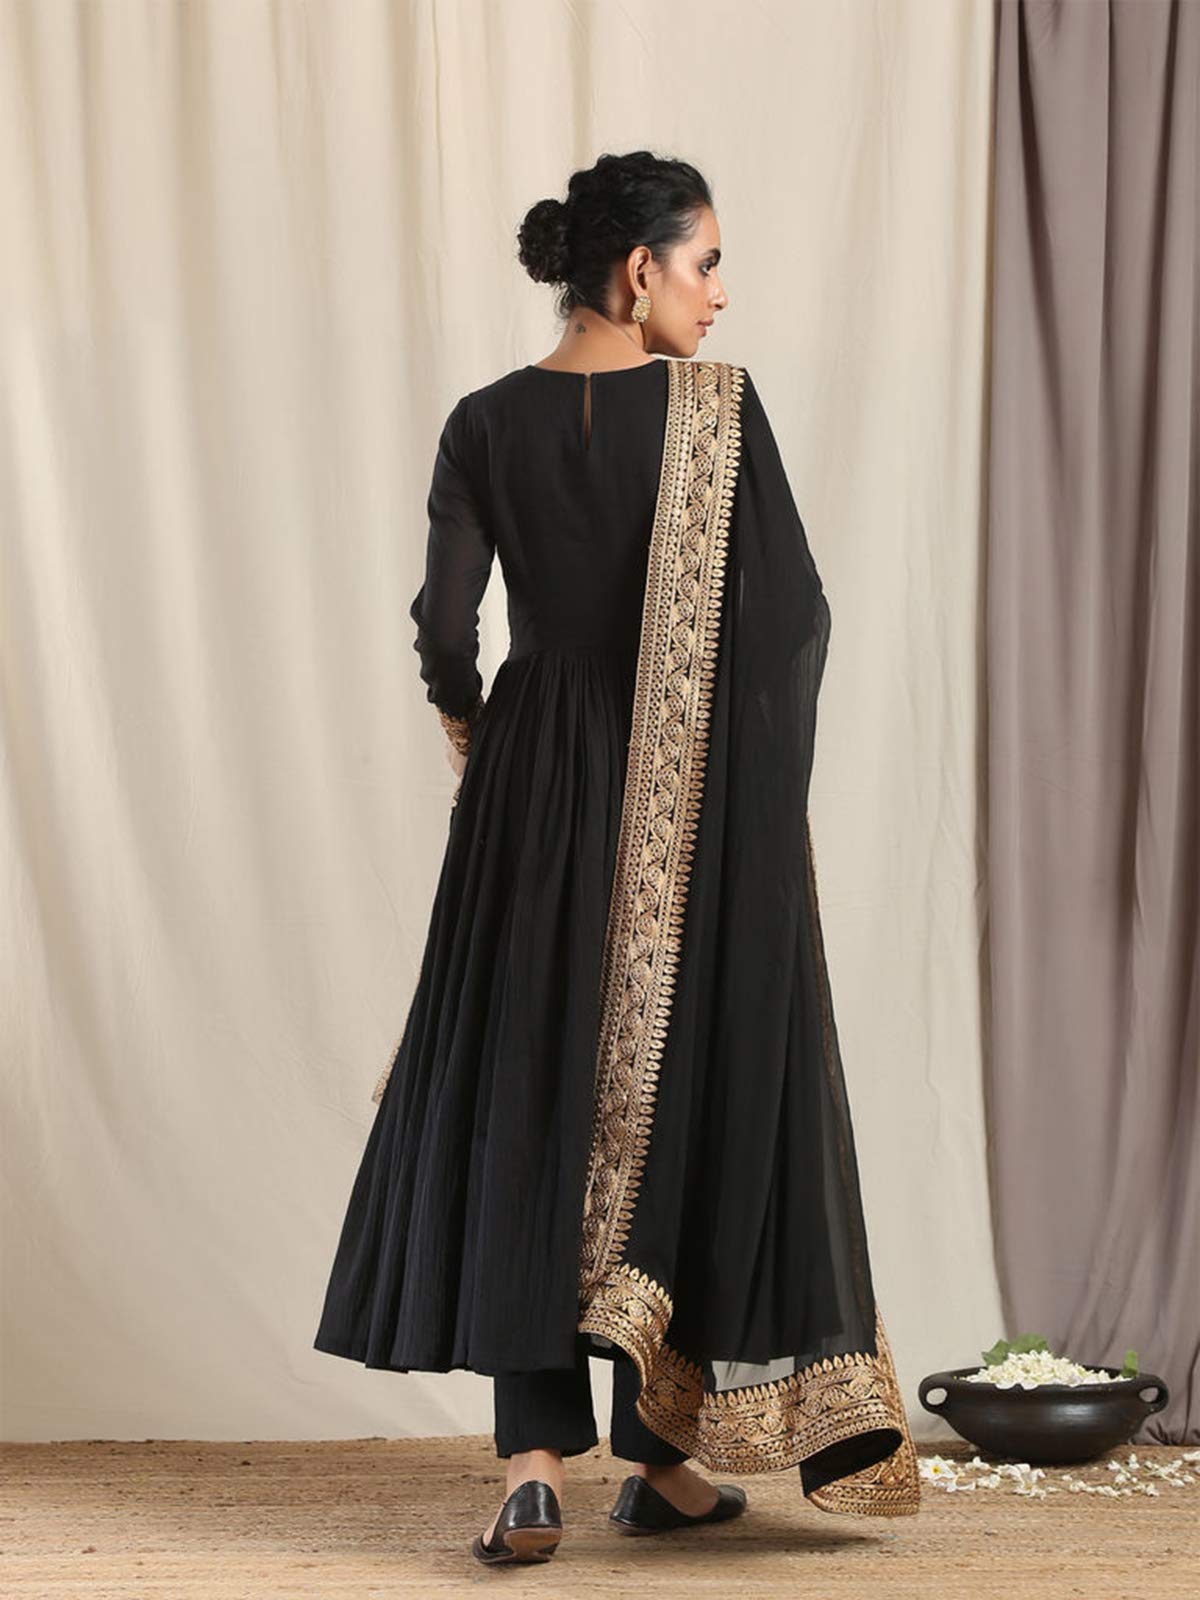 Indian Kurti for Womens With Pant | Rayon Embroidered Kurta Dupatta Kurtis Dress For Women Tops Tunic